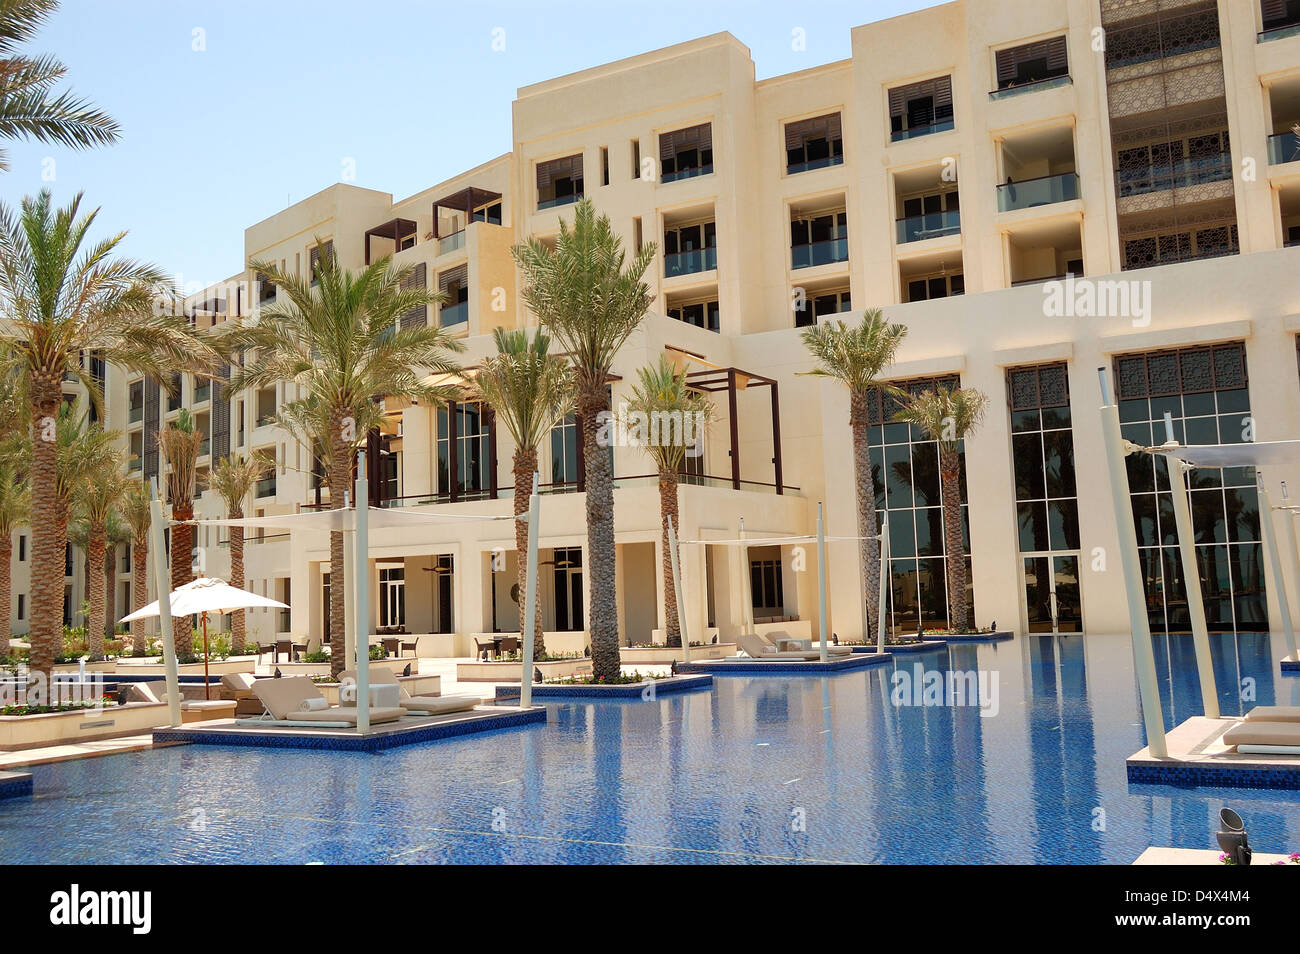 Huts at swimming pool of the luxury hotel, Saadiyat island, Abu Dhabi, UAE Stock Photo